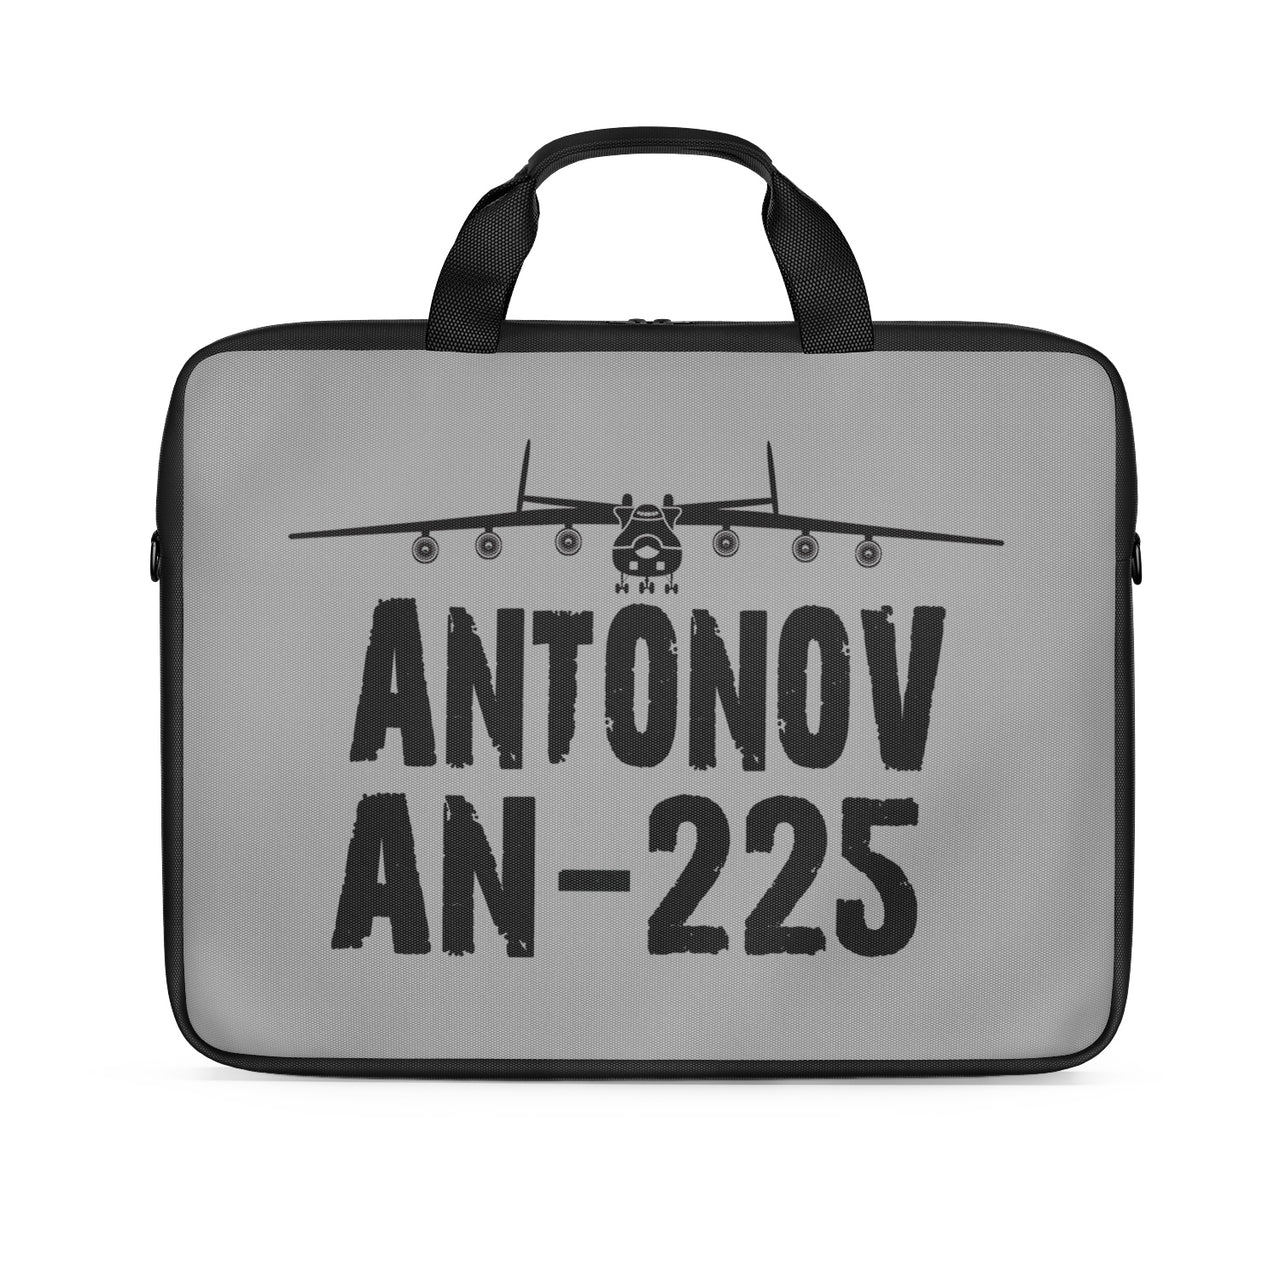 Antonov AN-225 & Plane Designed Laptop & Tablet Bags